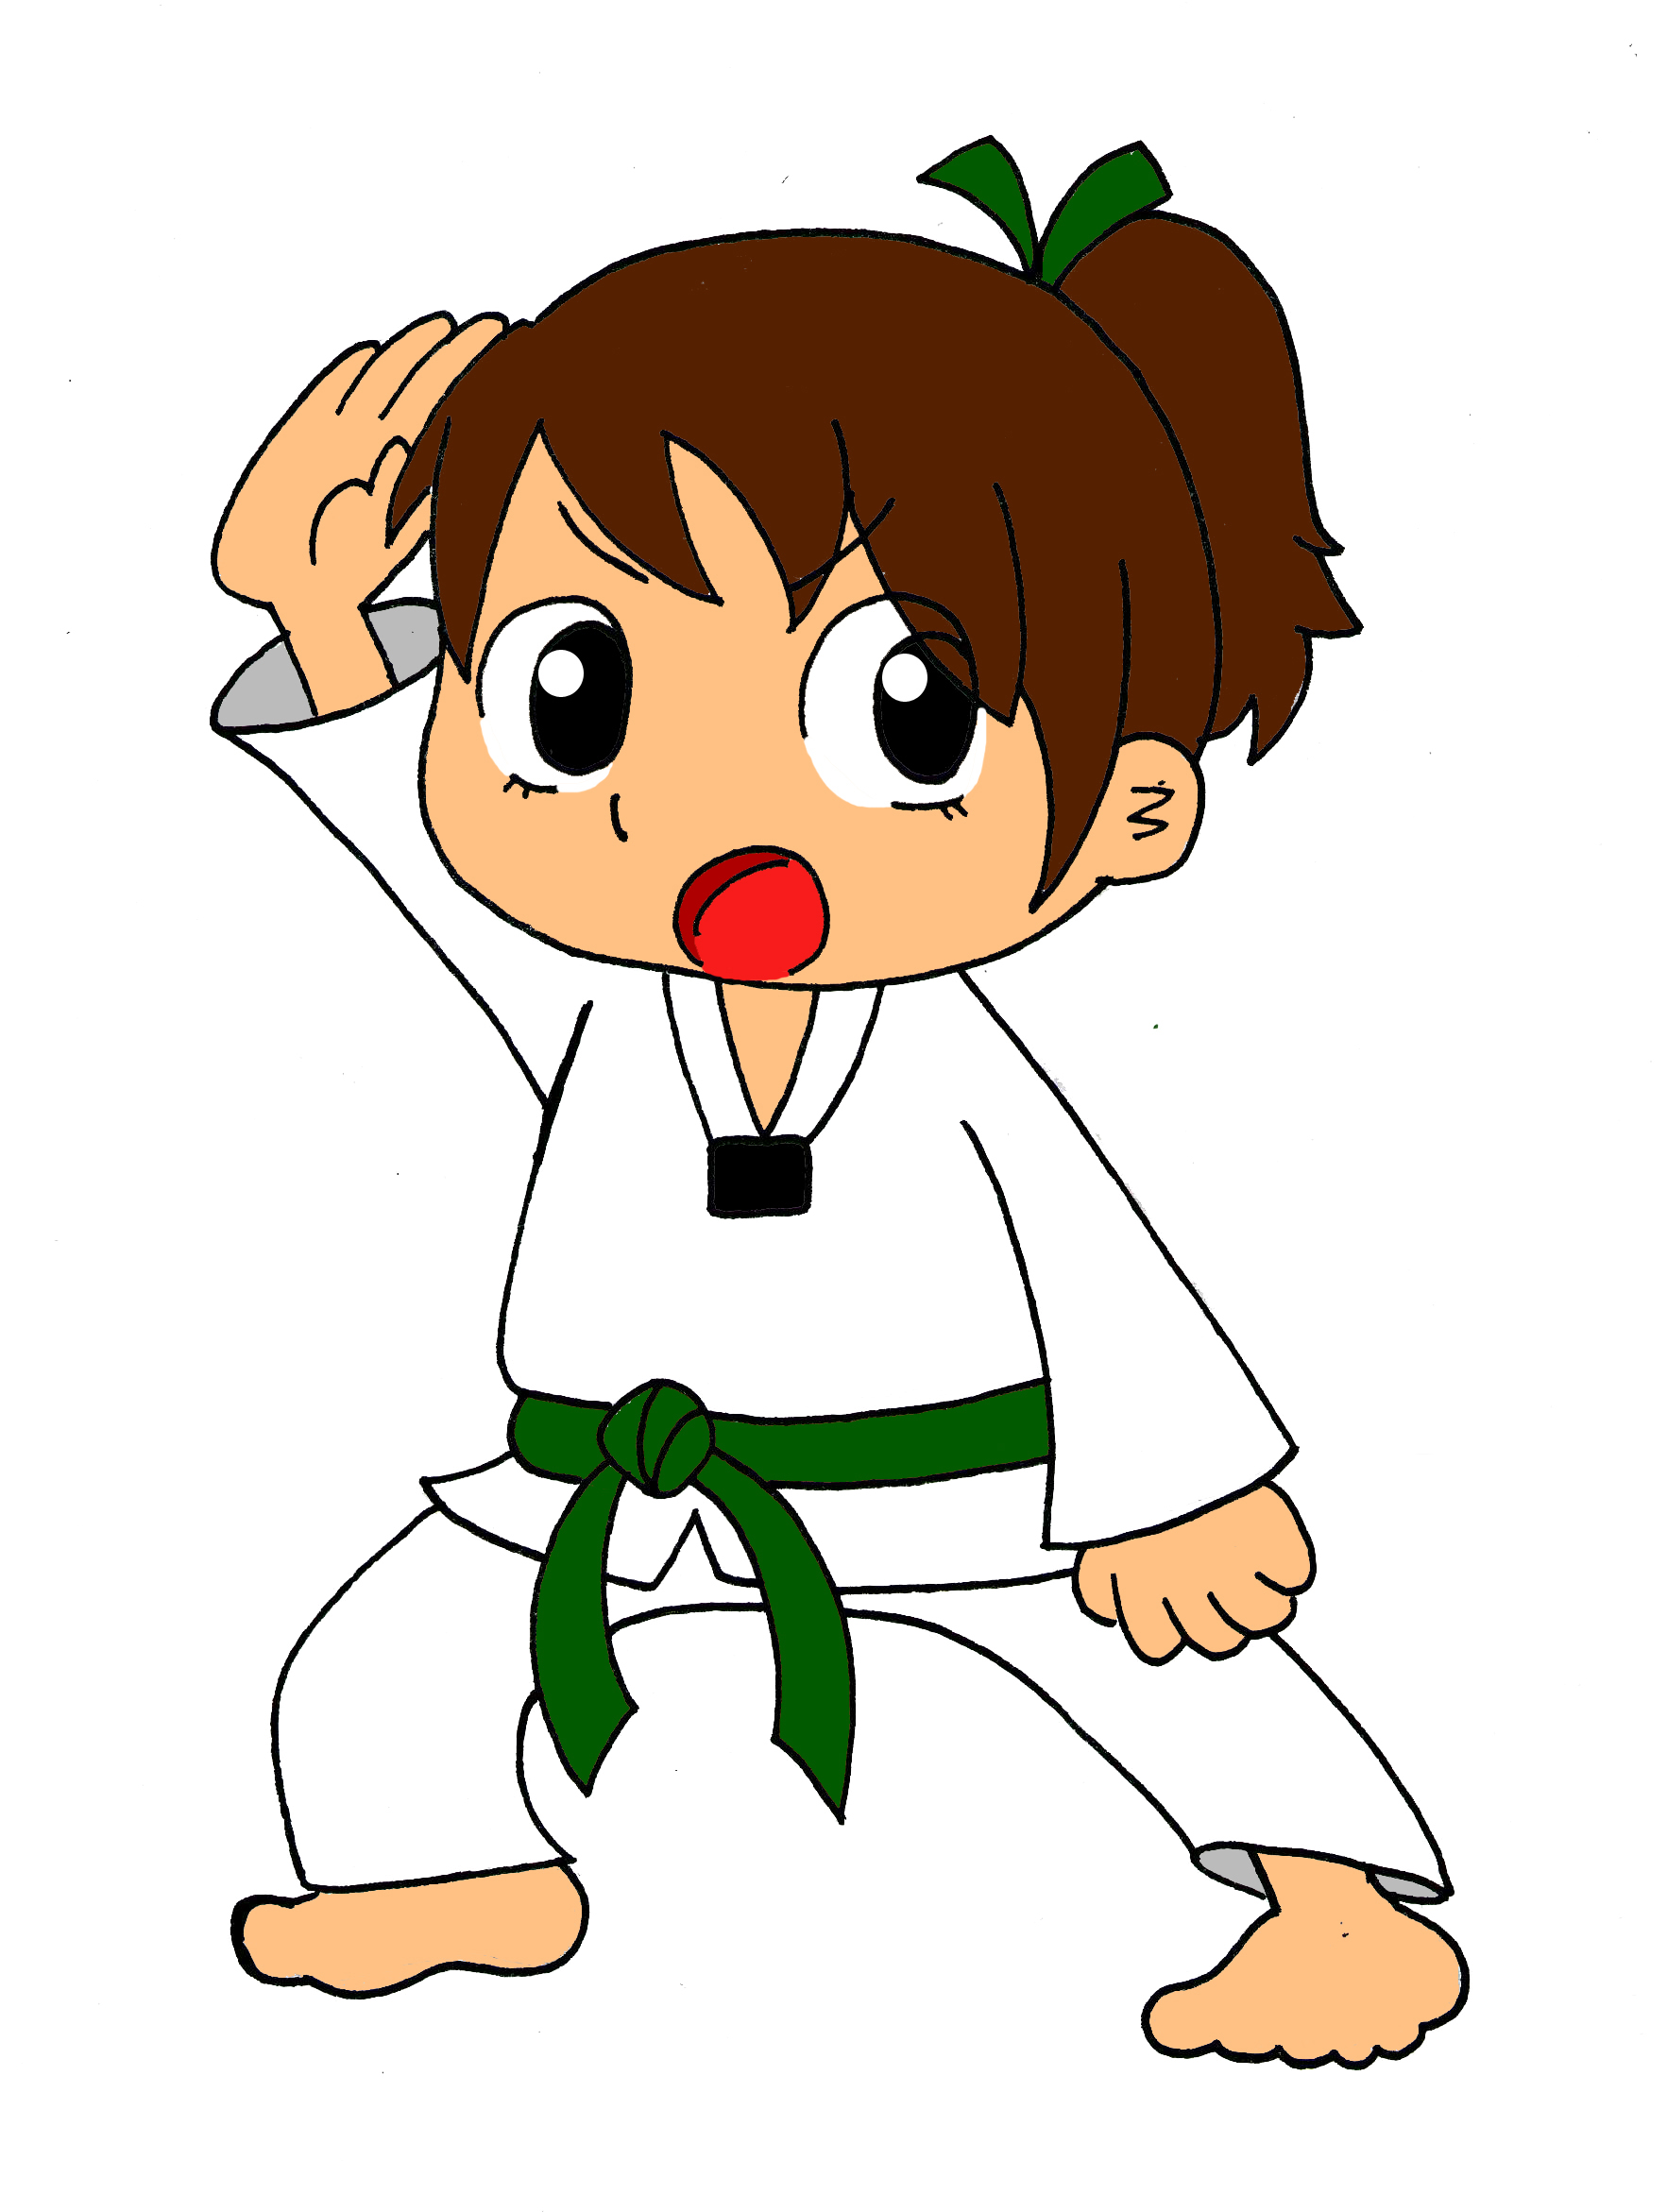 Karate cartoon clipart kid 2